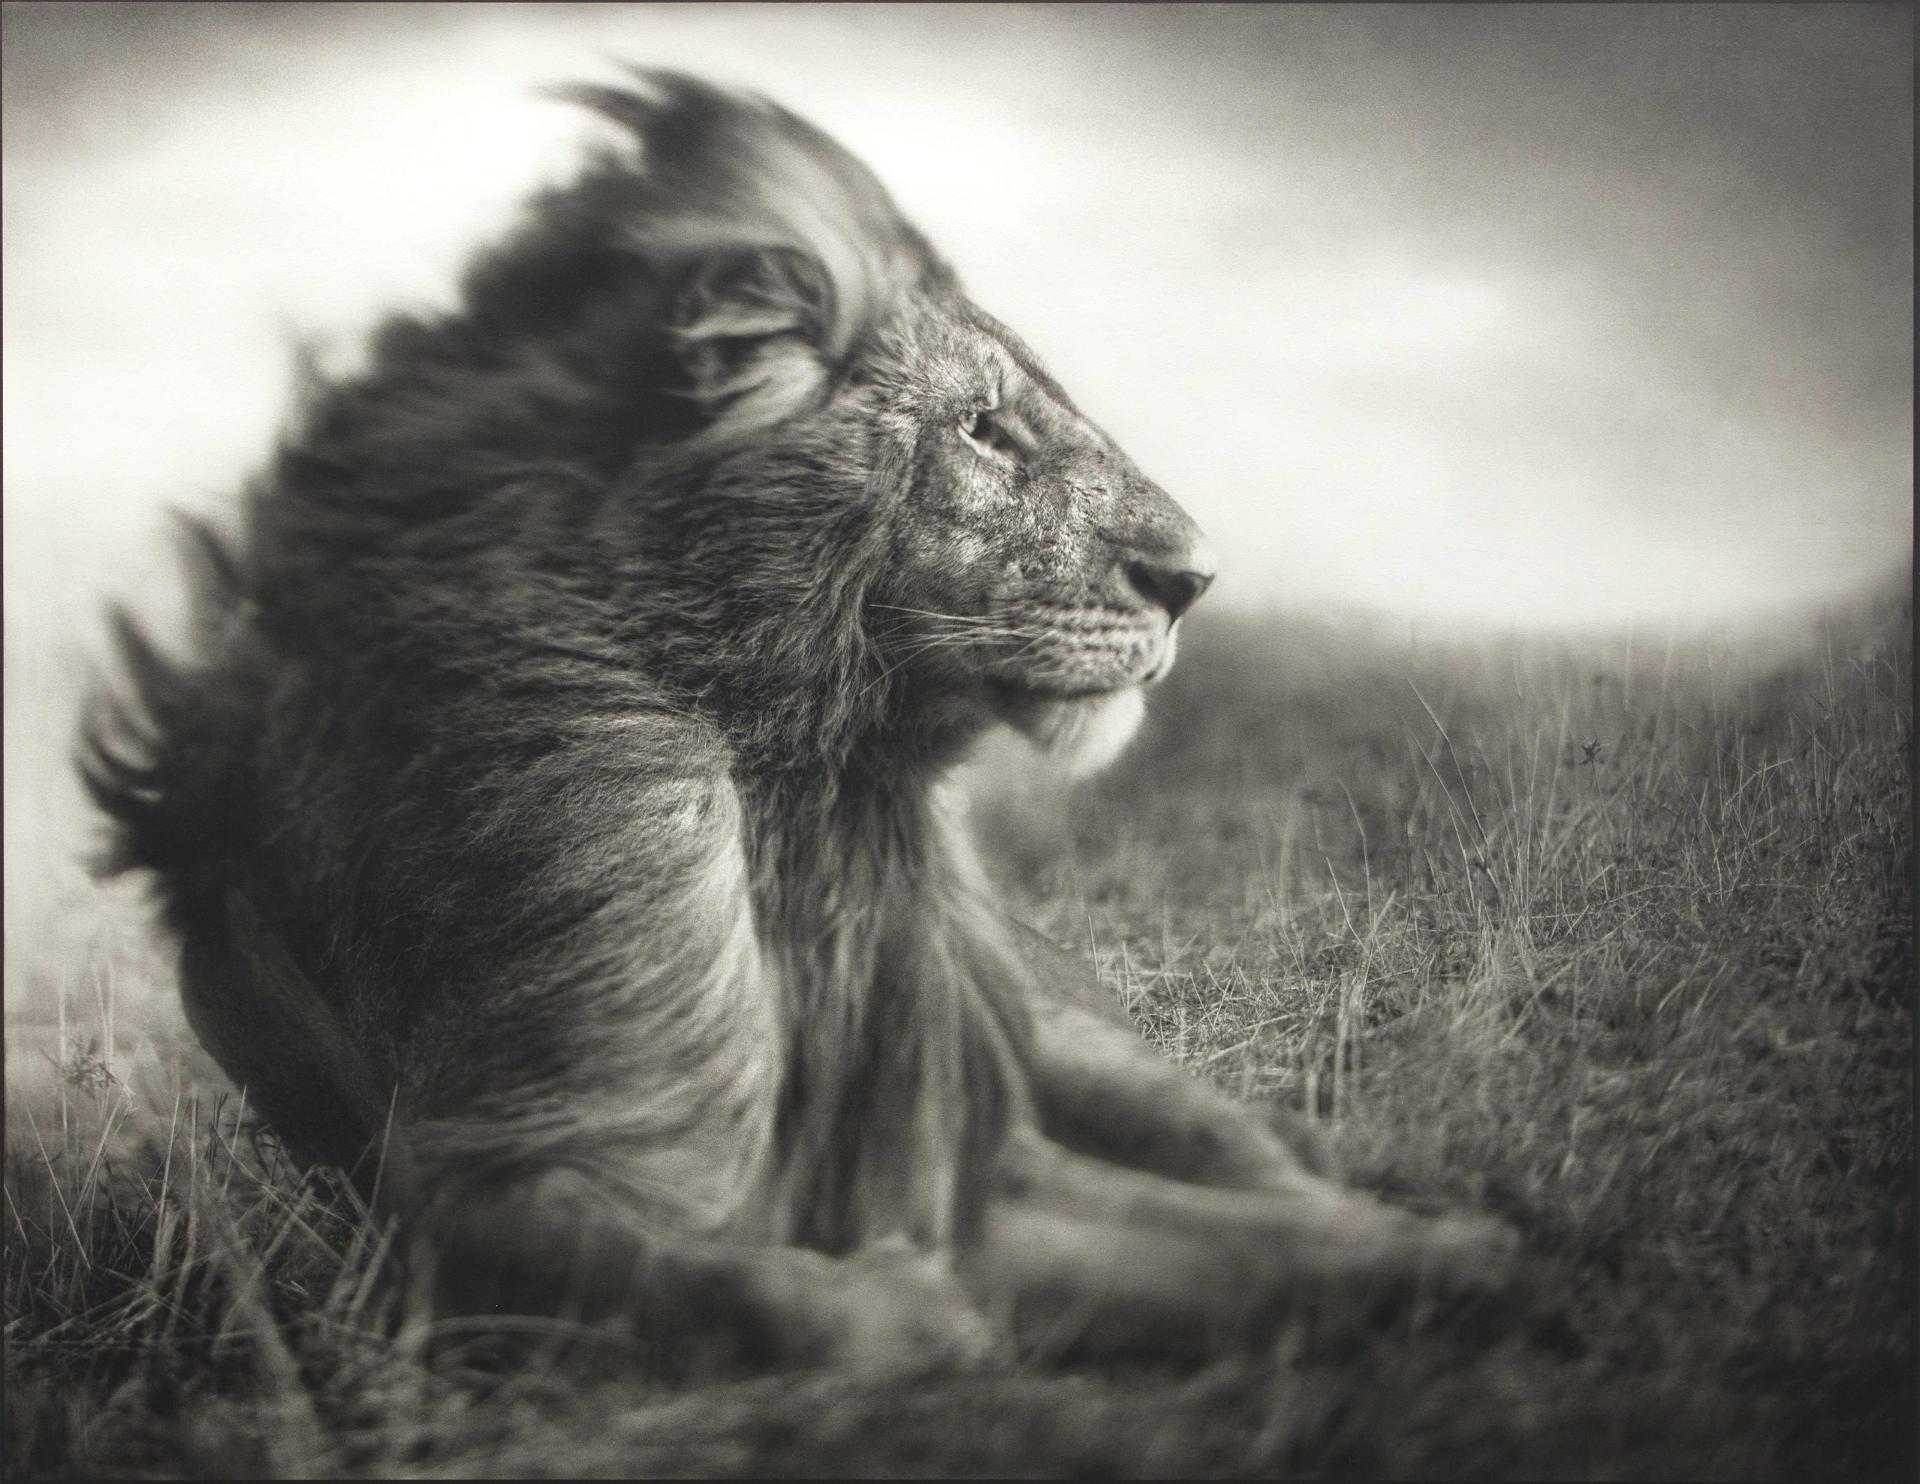 Nick Brandt (1964) - Lion Before Storm II – Sitting Profile, Maasai Mara, 2006